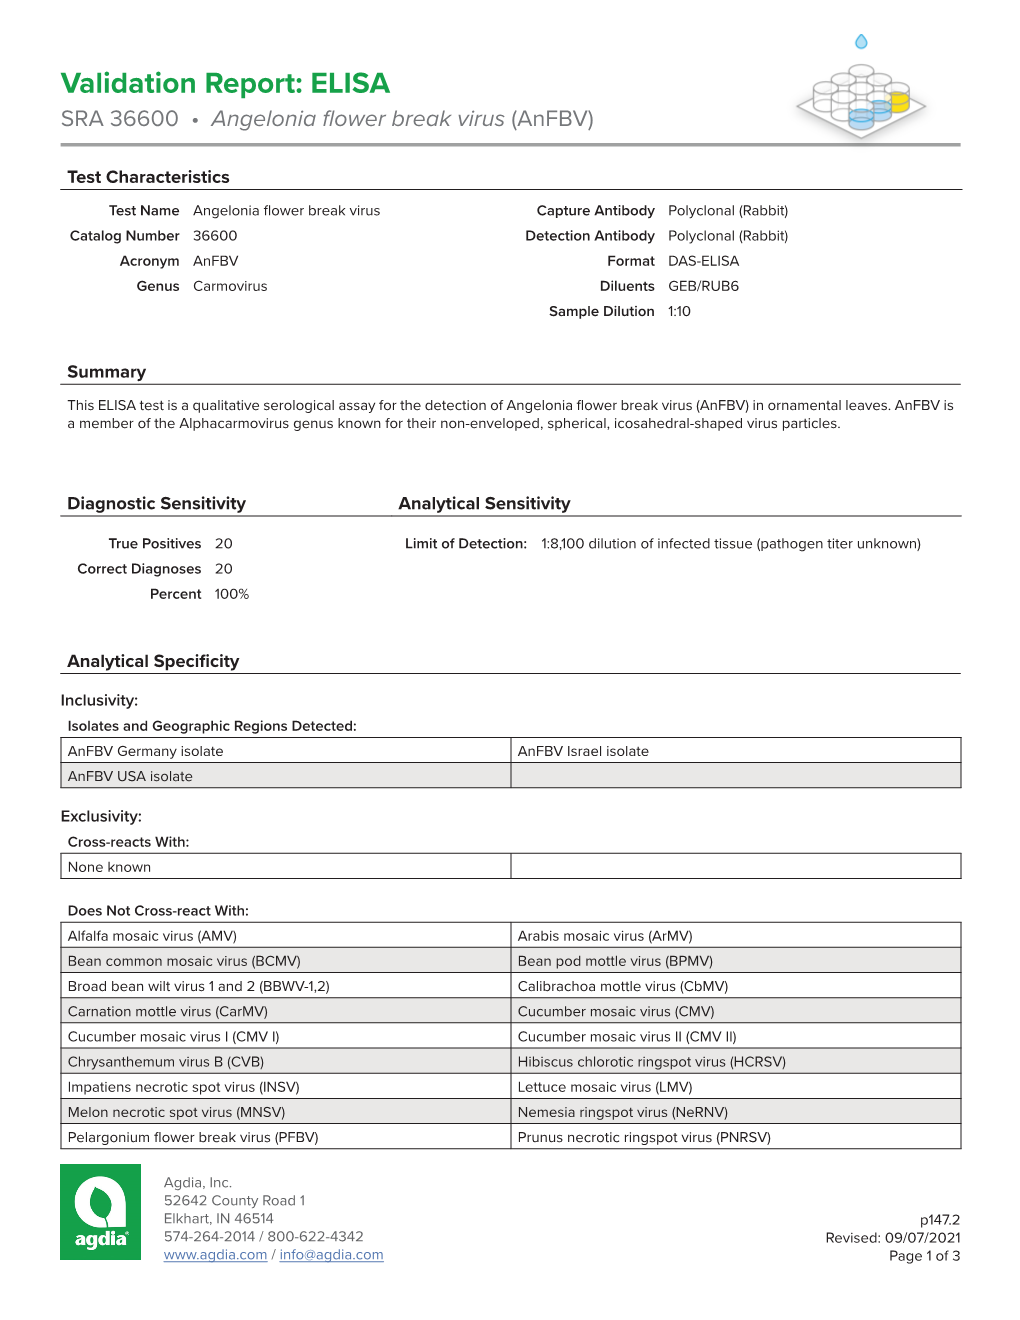 Validation Report: ELISA SRA 36600 • Angelonia Flower Break Virus (Anfbv)